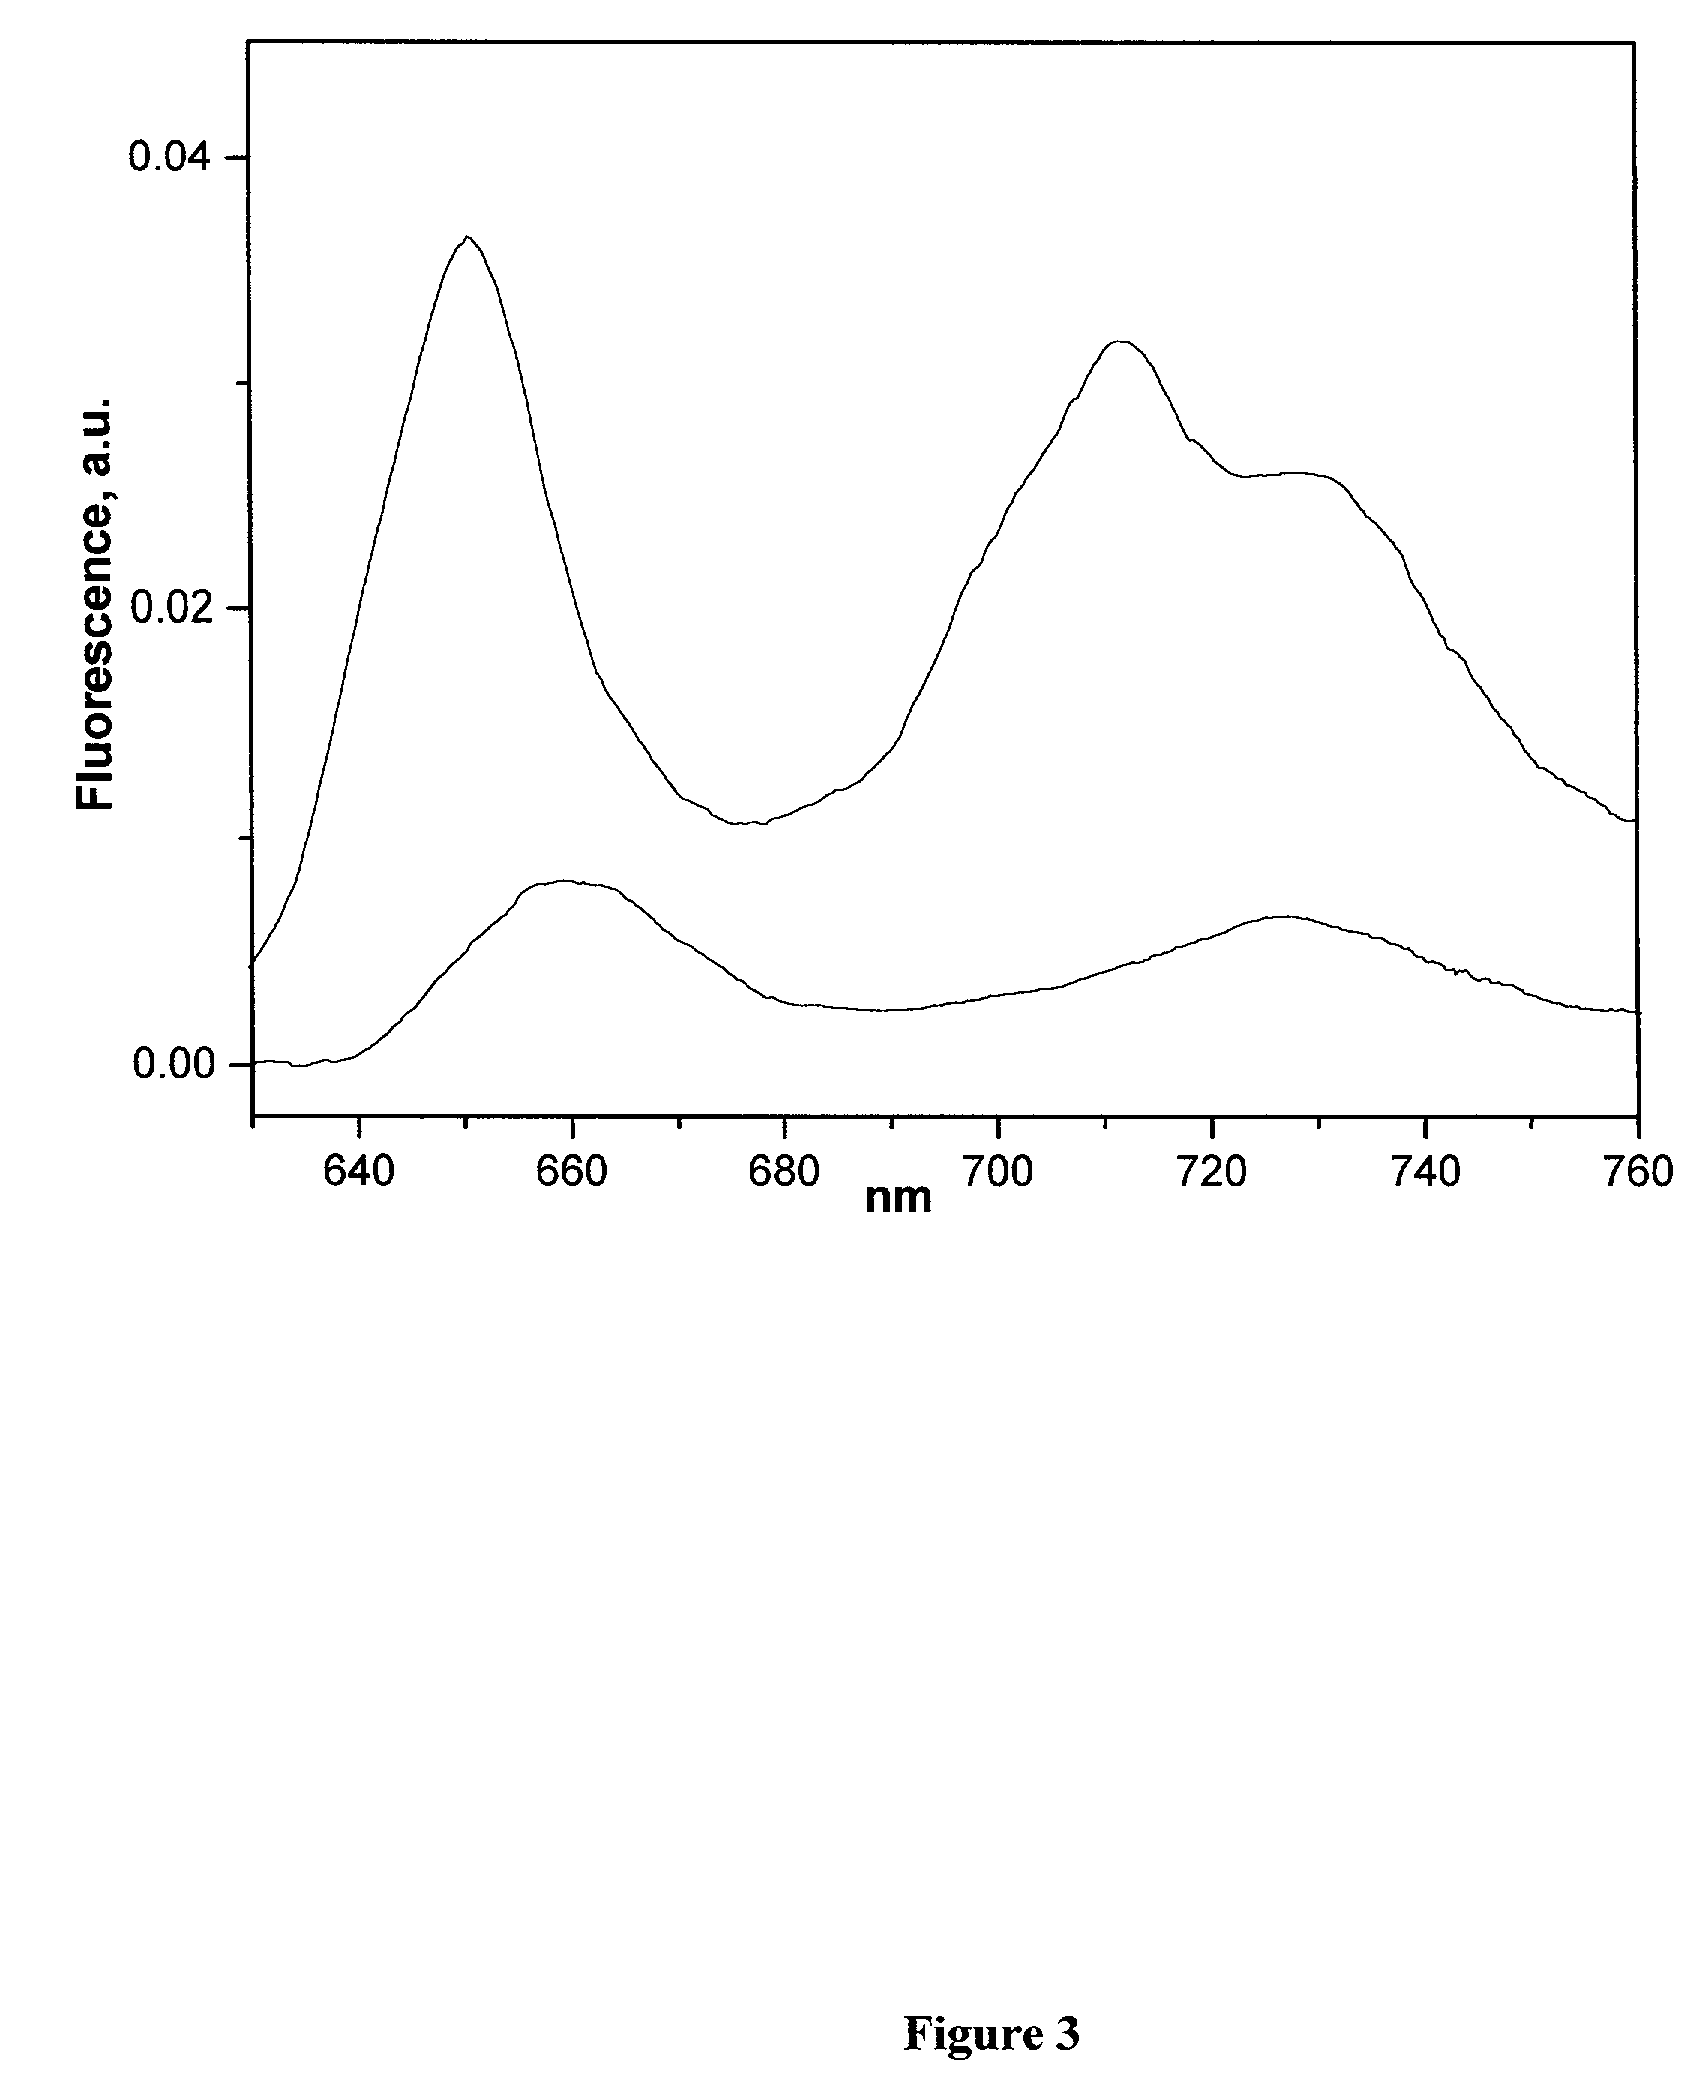 Method for detection of gases based on fluorescence enhancement in porphyrin aggregates